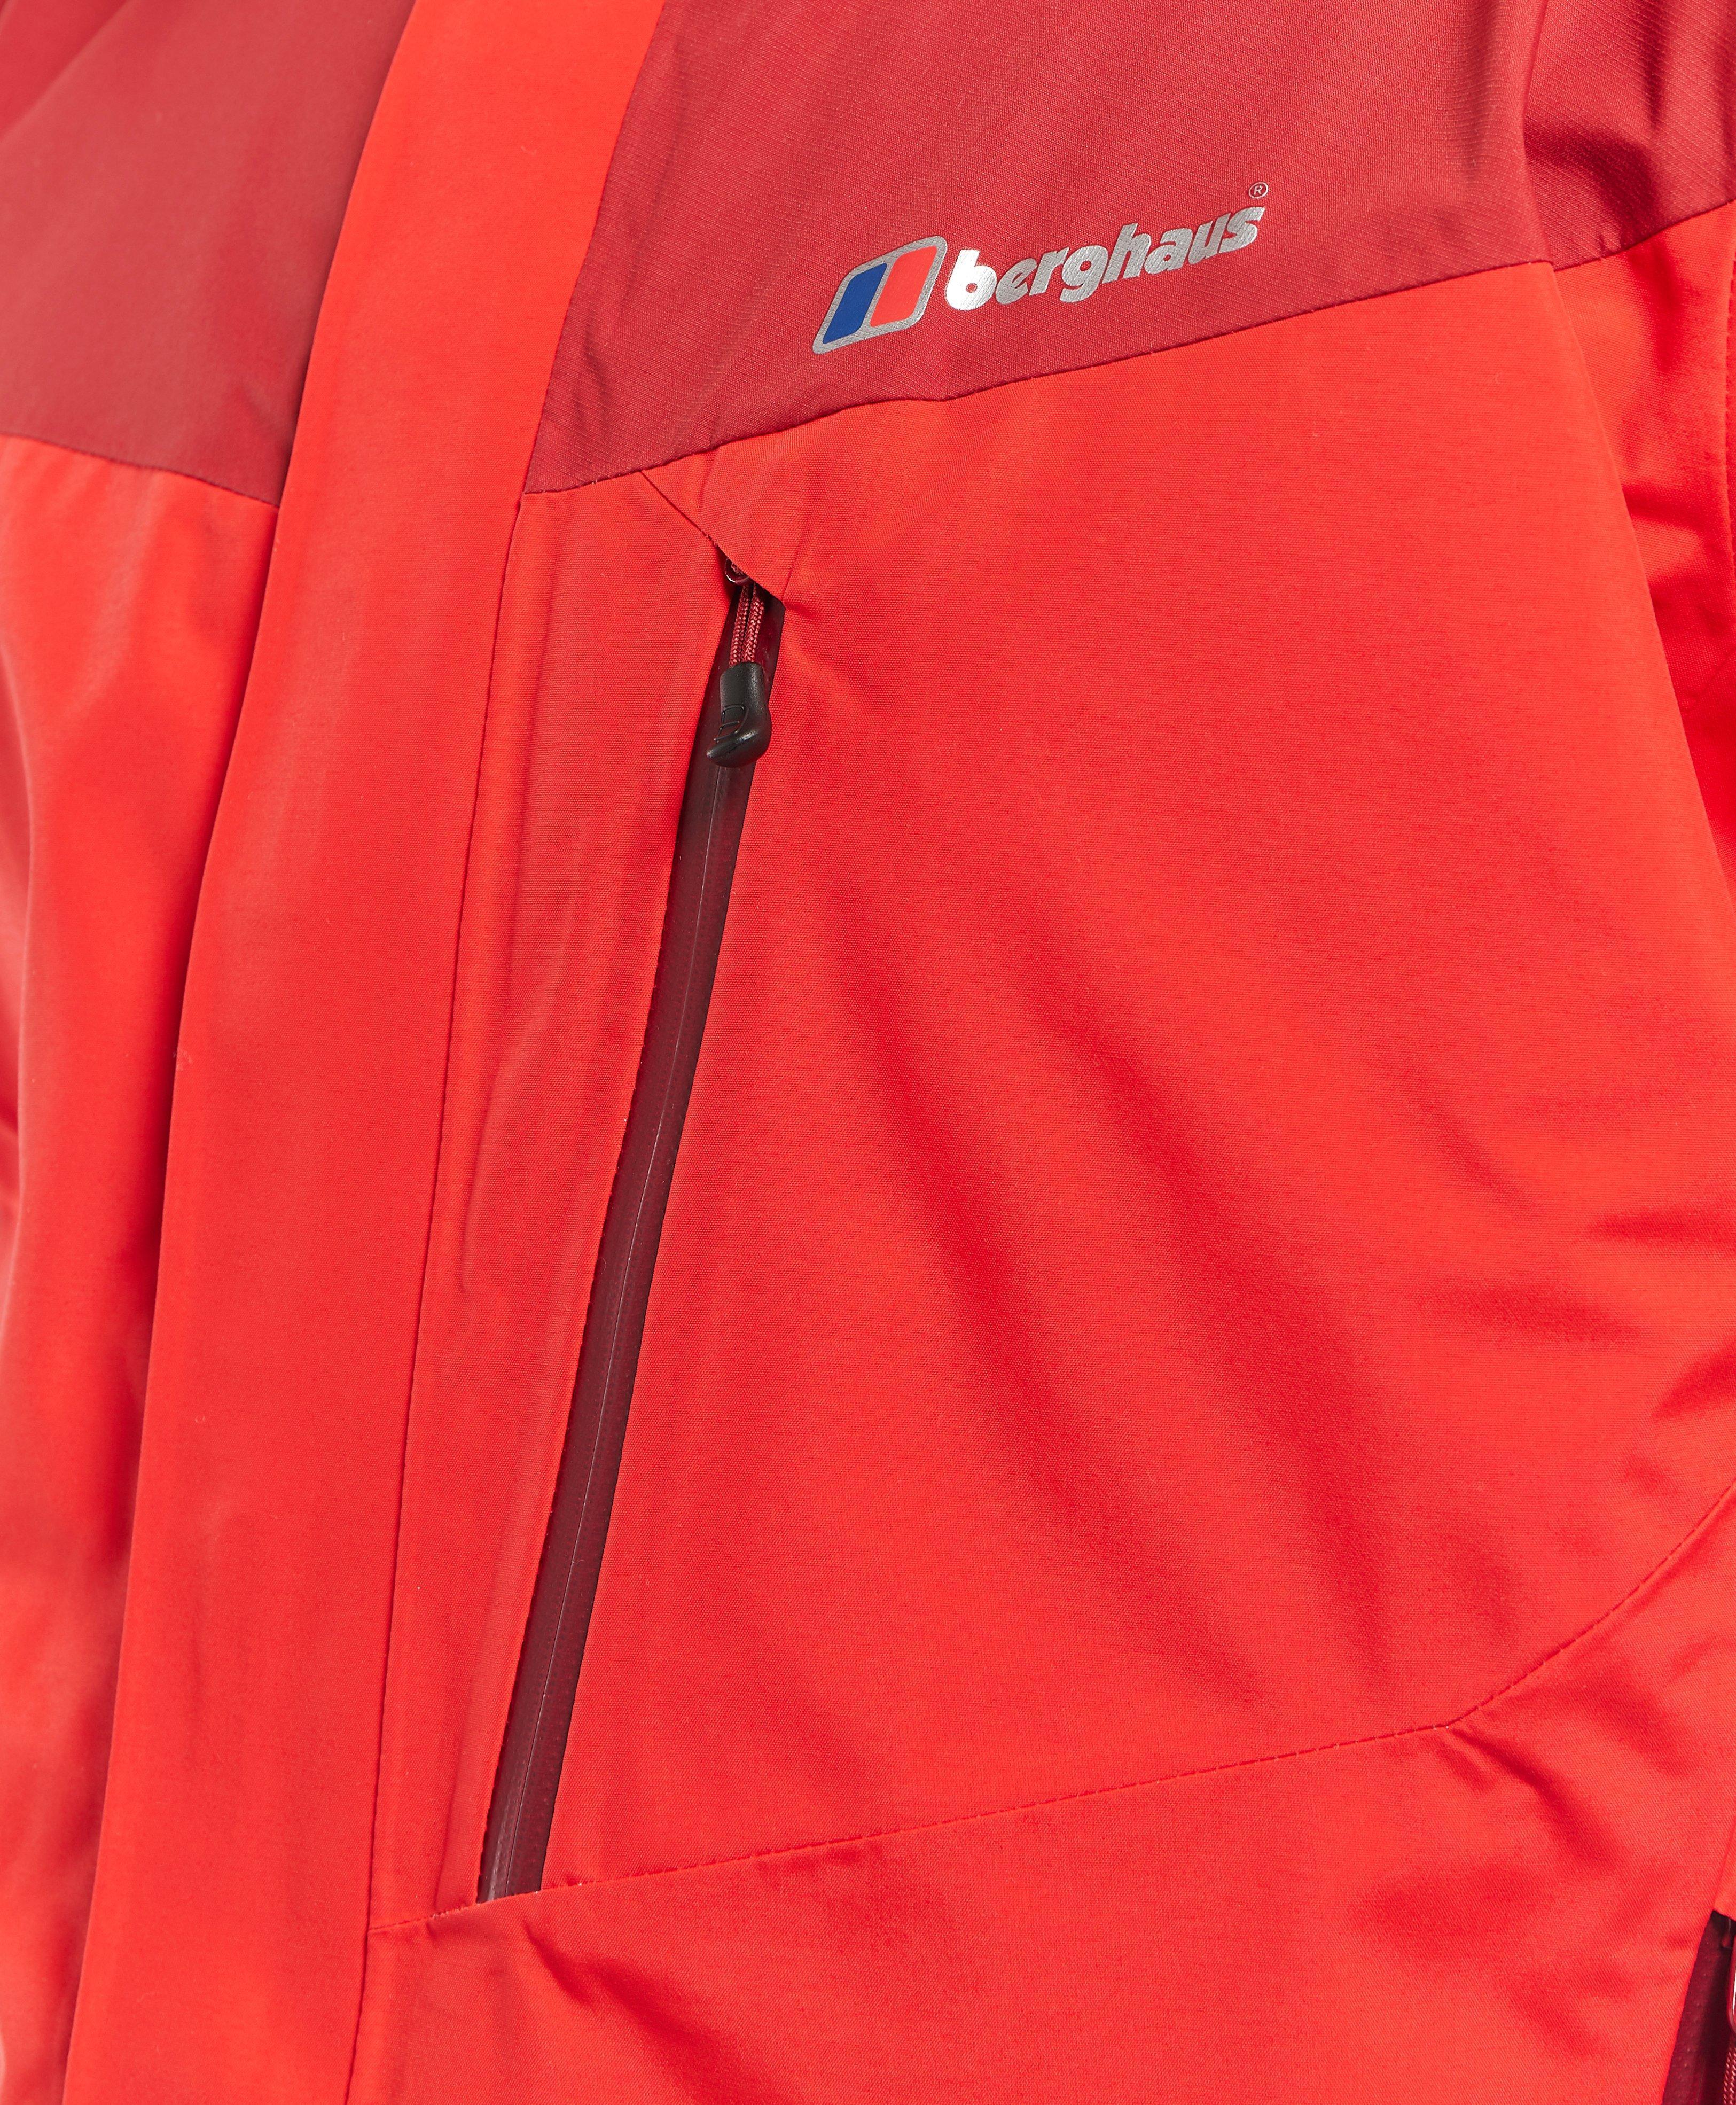 Berghaus Synthetic Arran Lightweight Hydroshell Waterproof Jacket in Red  for Men - Lyst